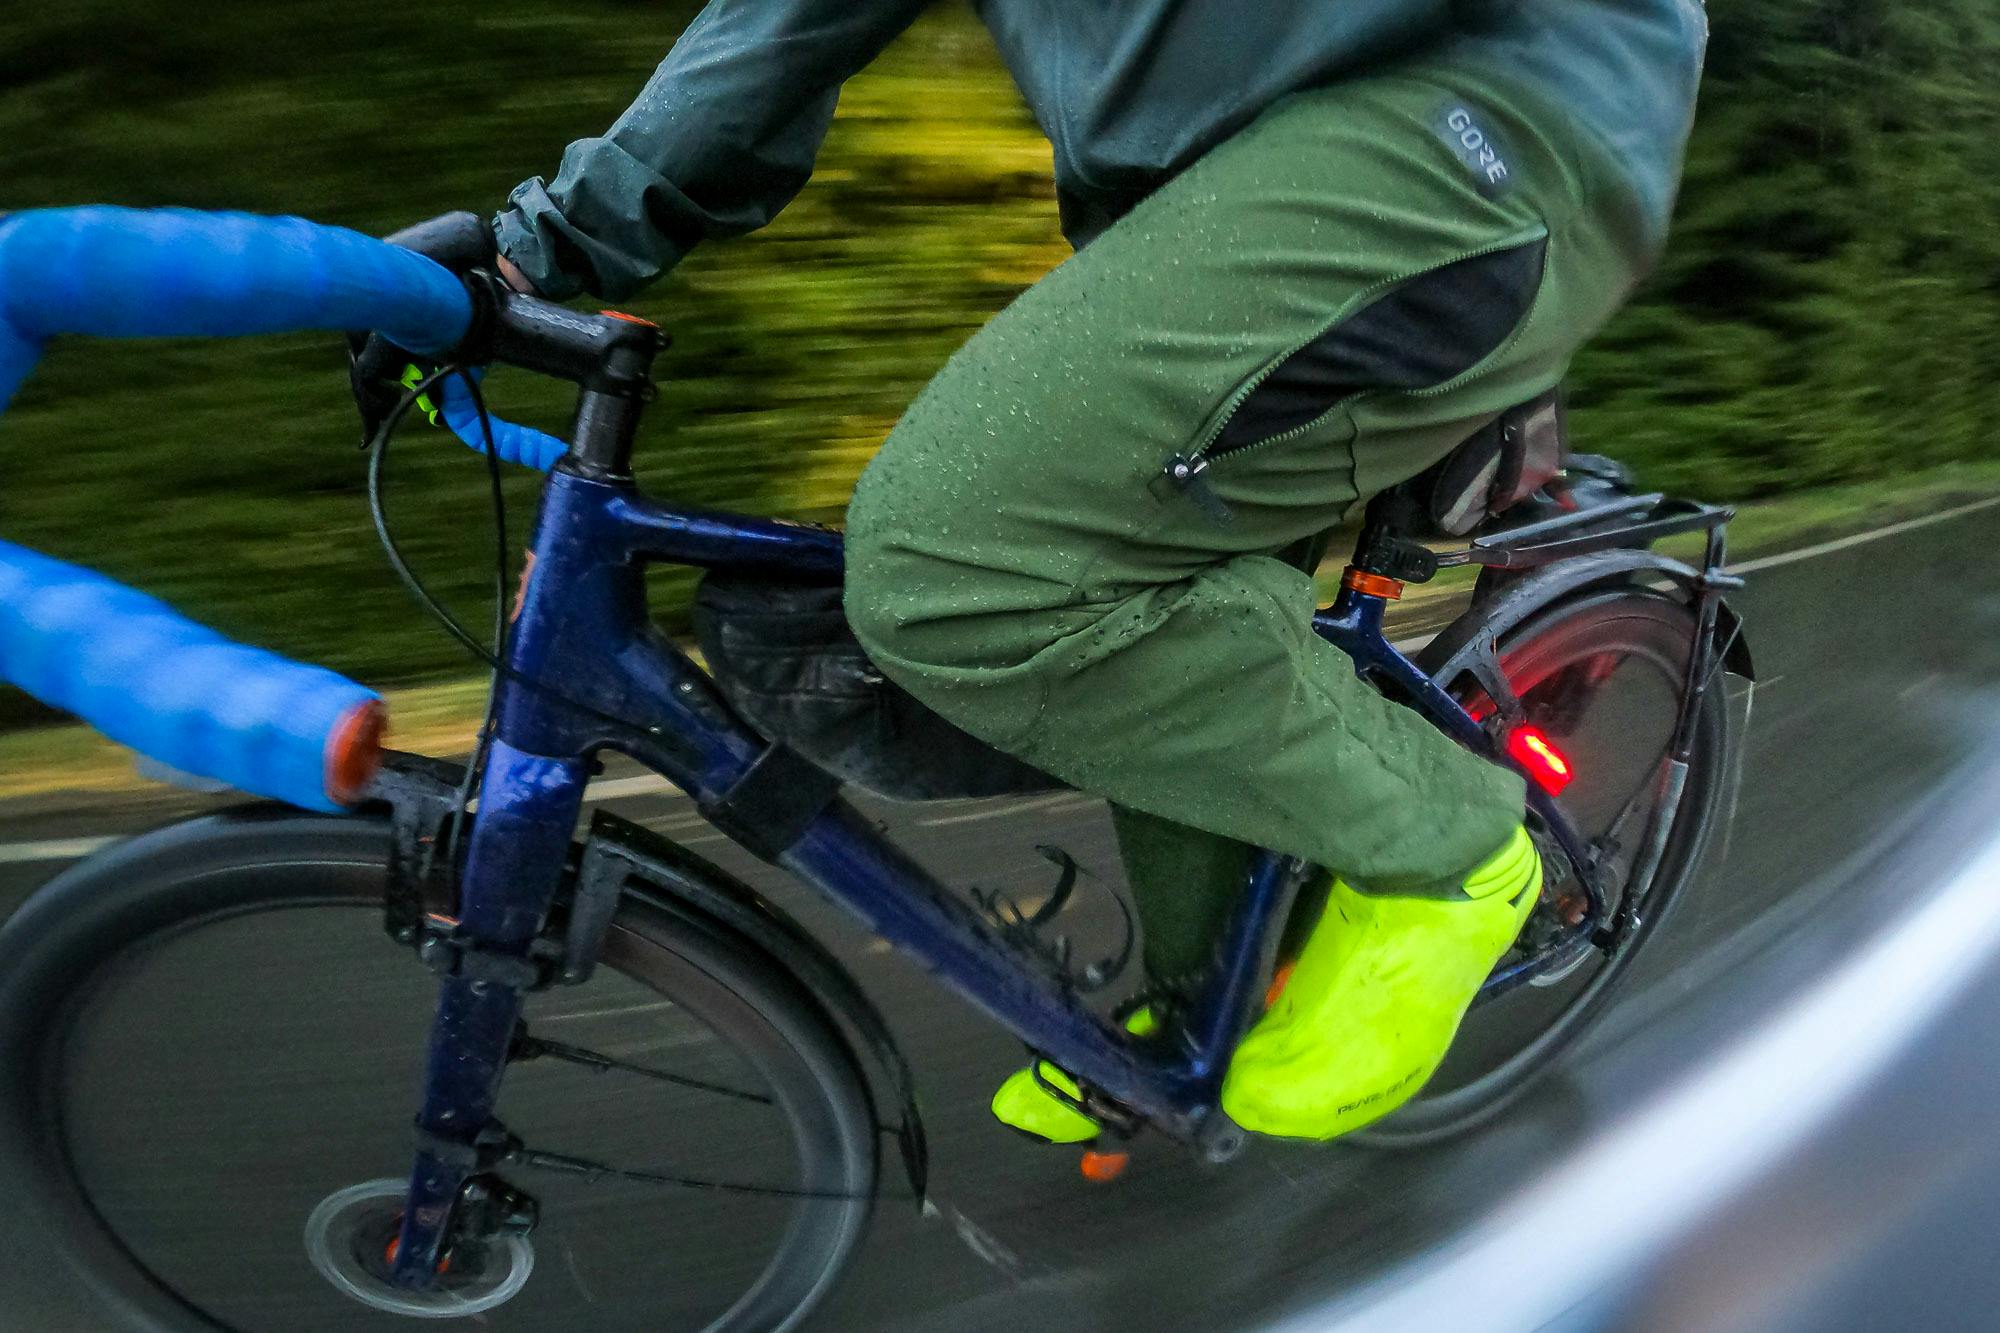 weatherproof cycling pants